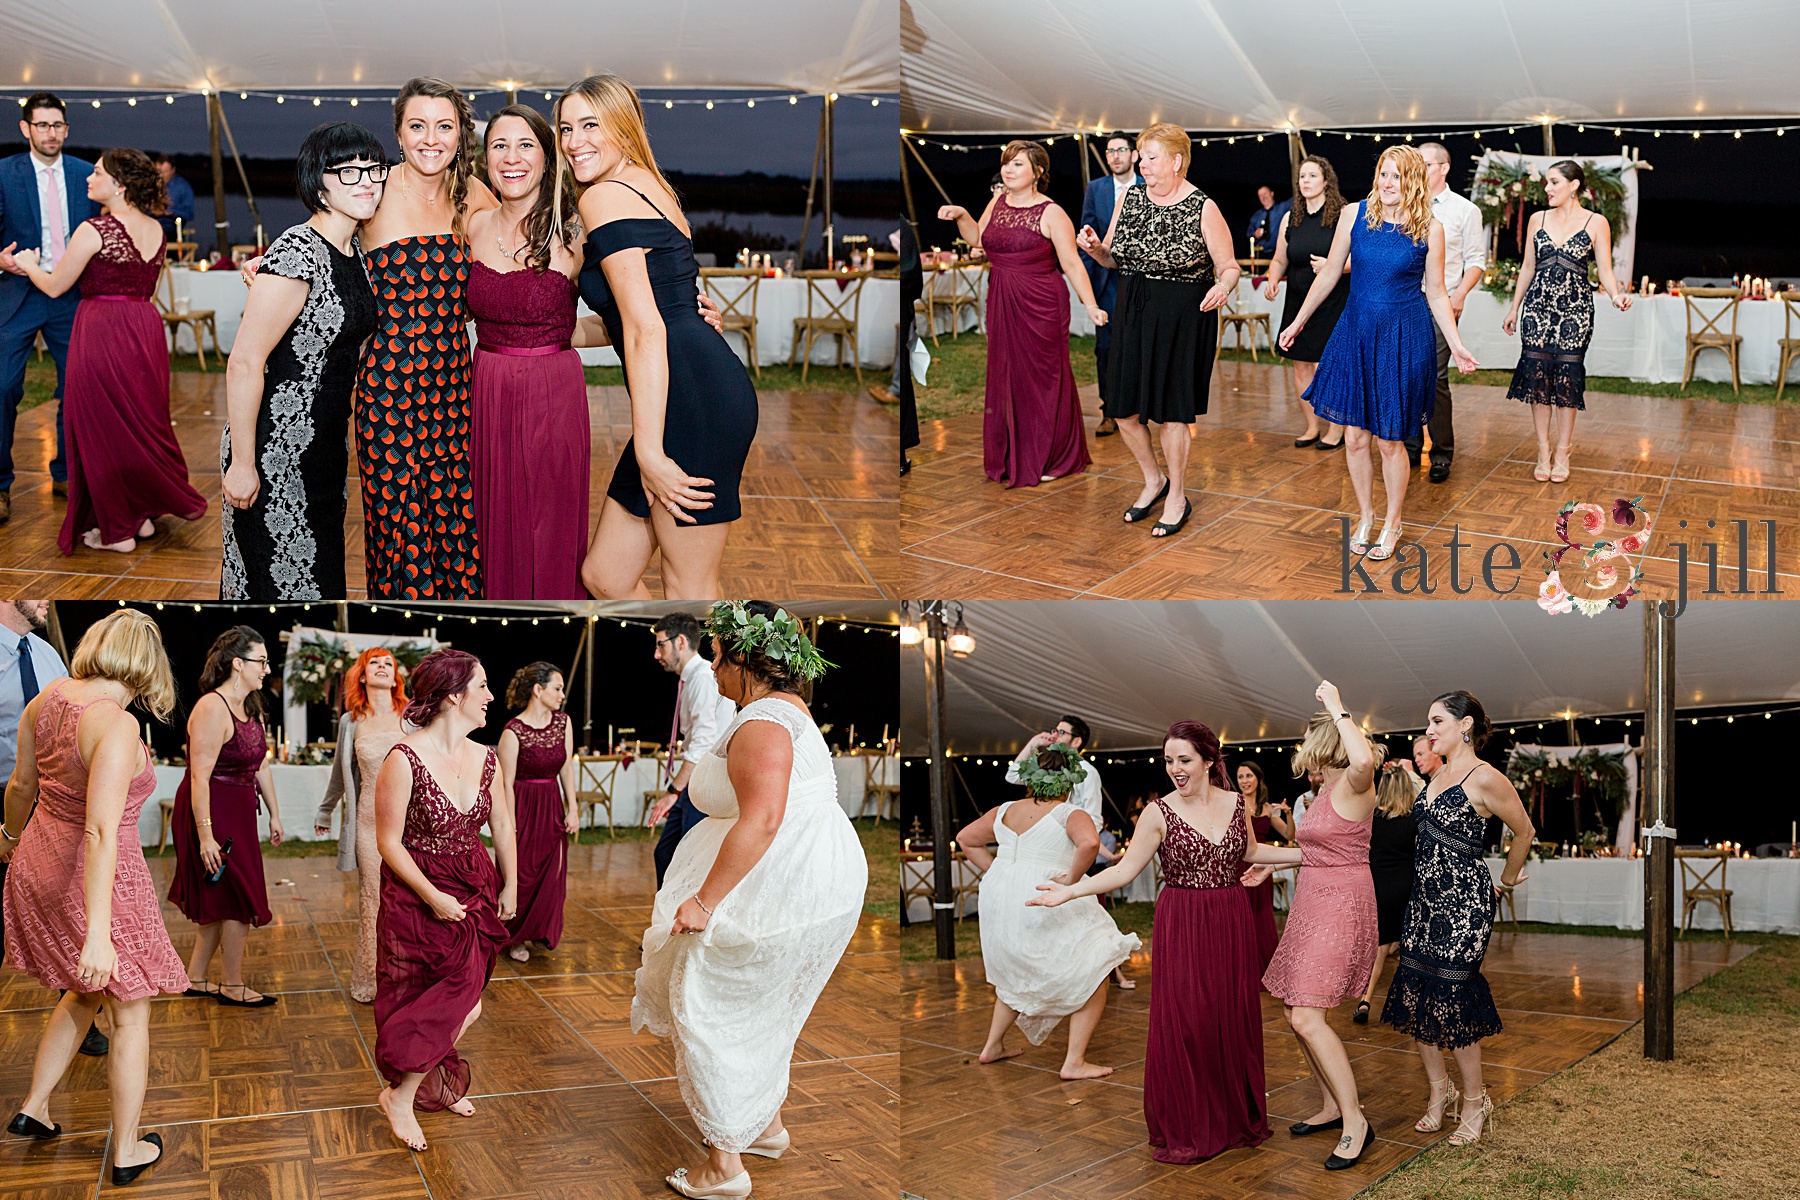 dancing reception photos under tent